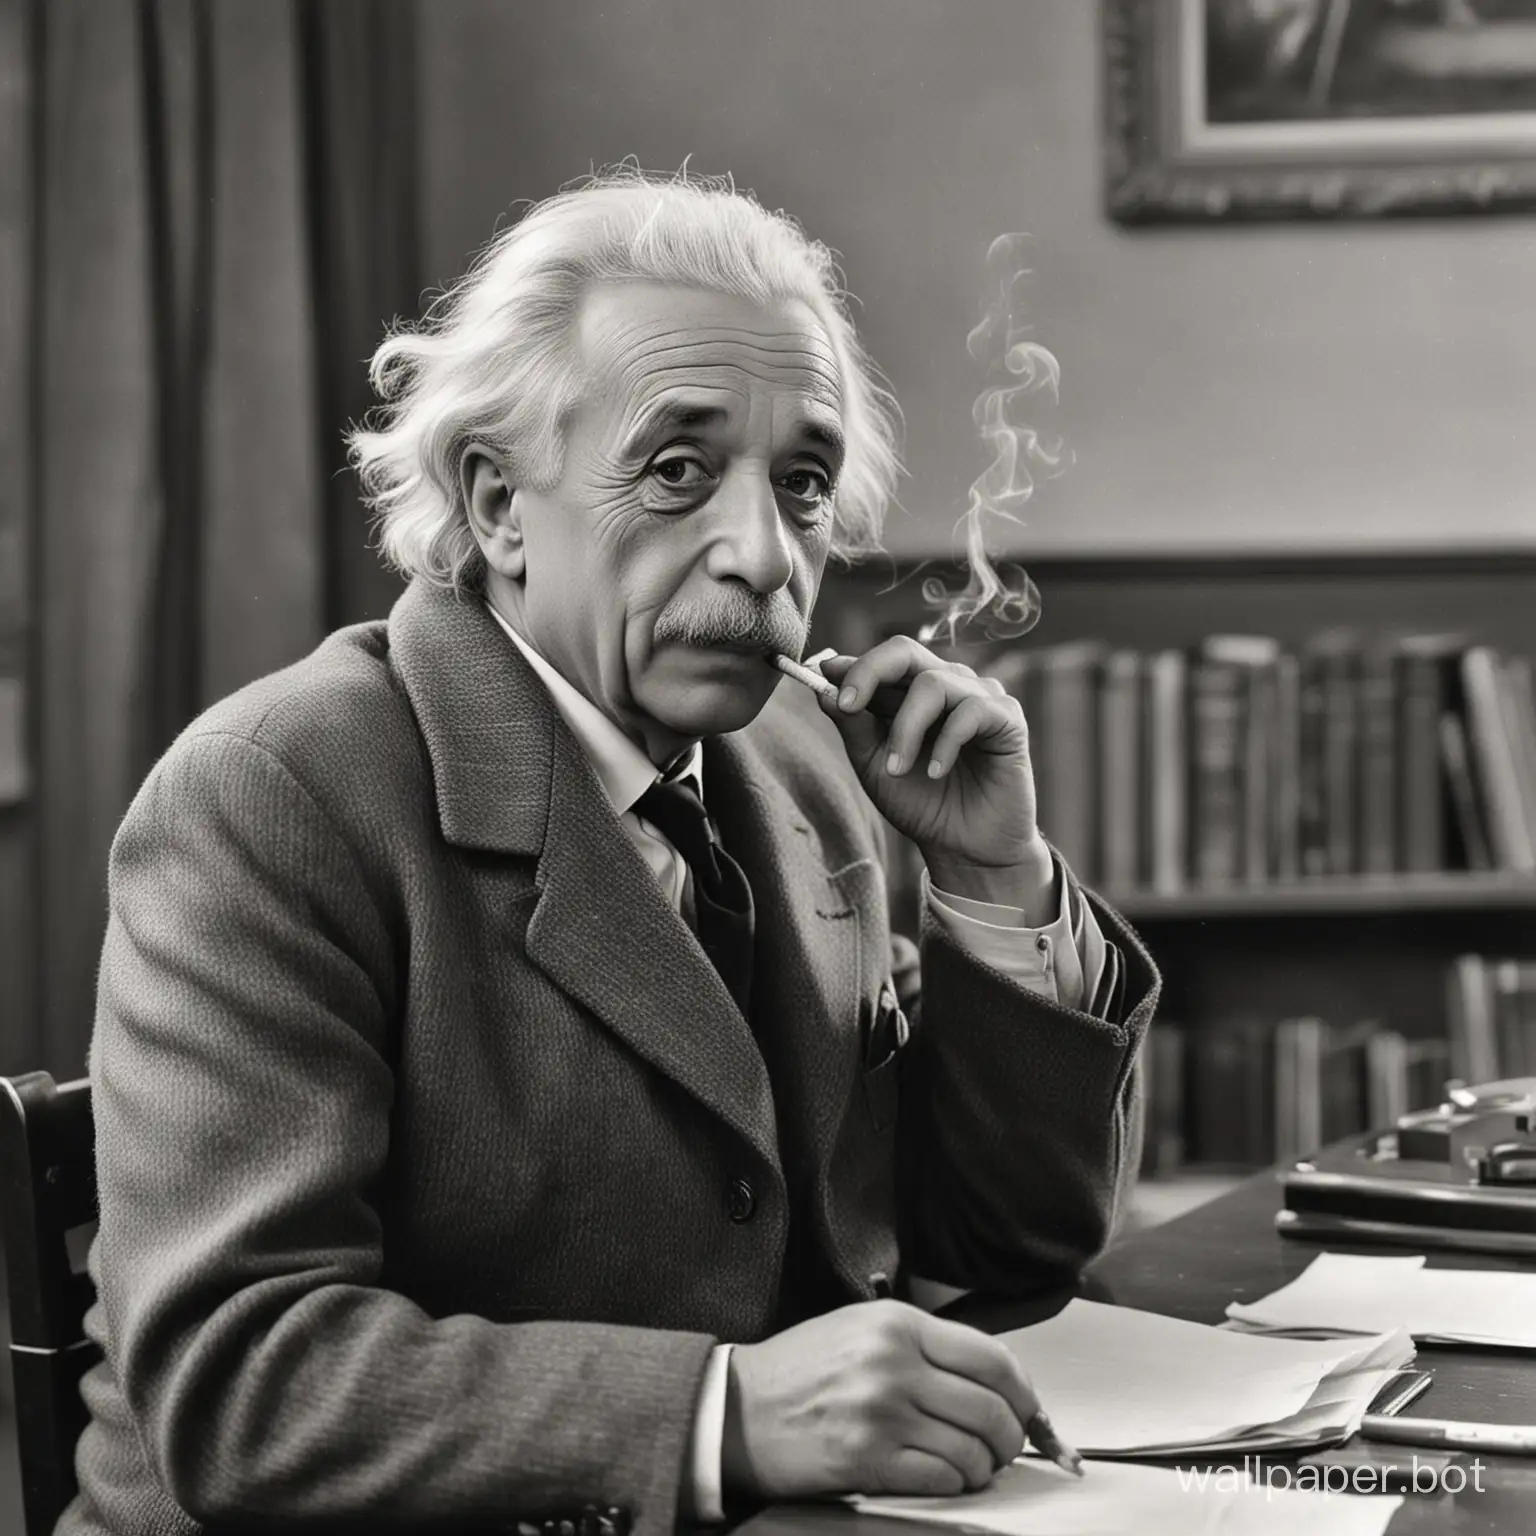 Albert Einstein smoking a joint, time period office background, black and white photo. Circa 1925